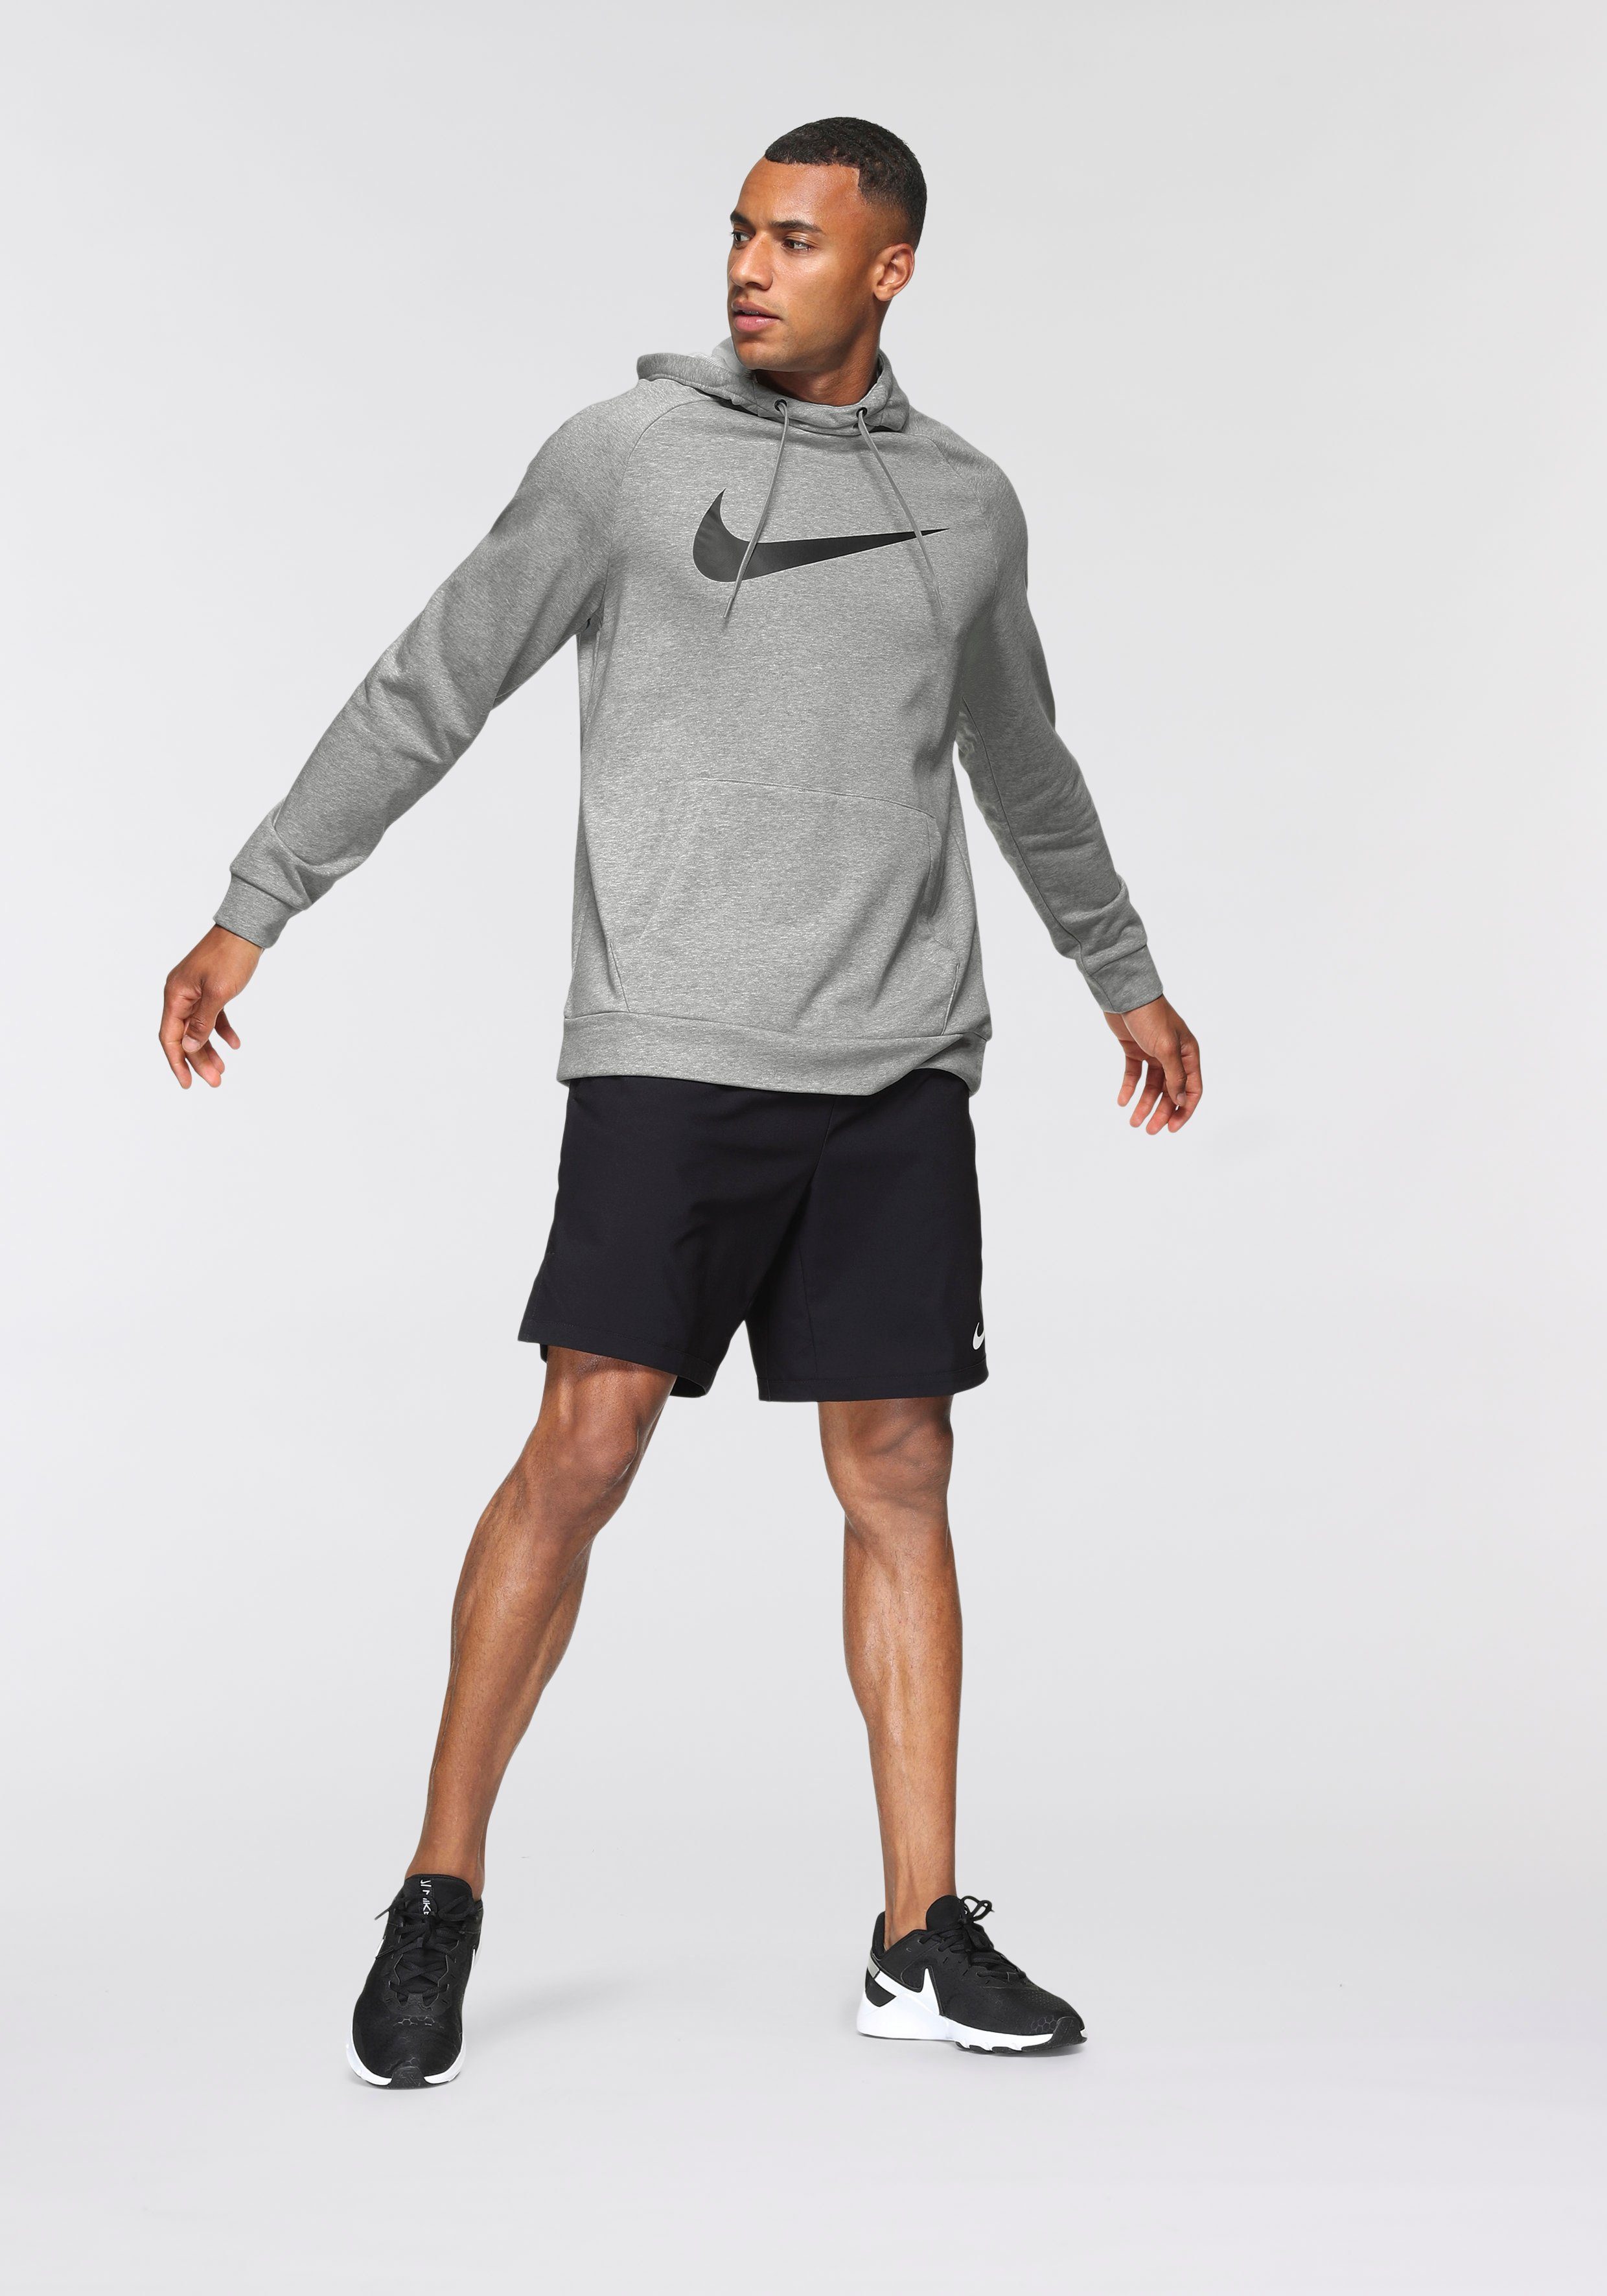 Nike Kapuzensweatshirt TRAINING MEN'S grau DRI-FIT PULLOVER HOODIE